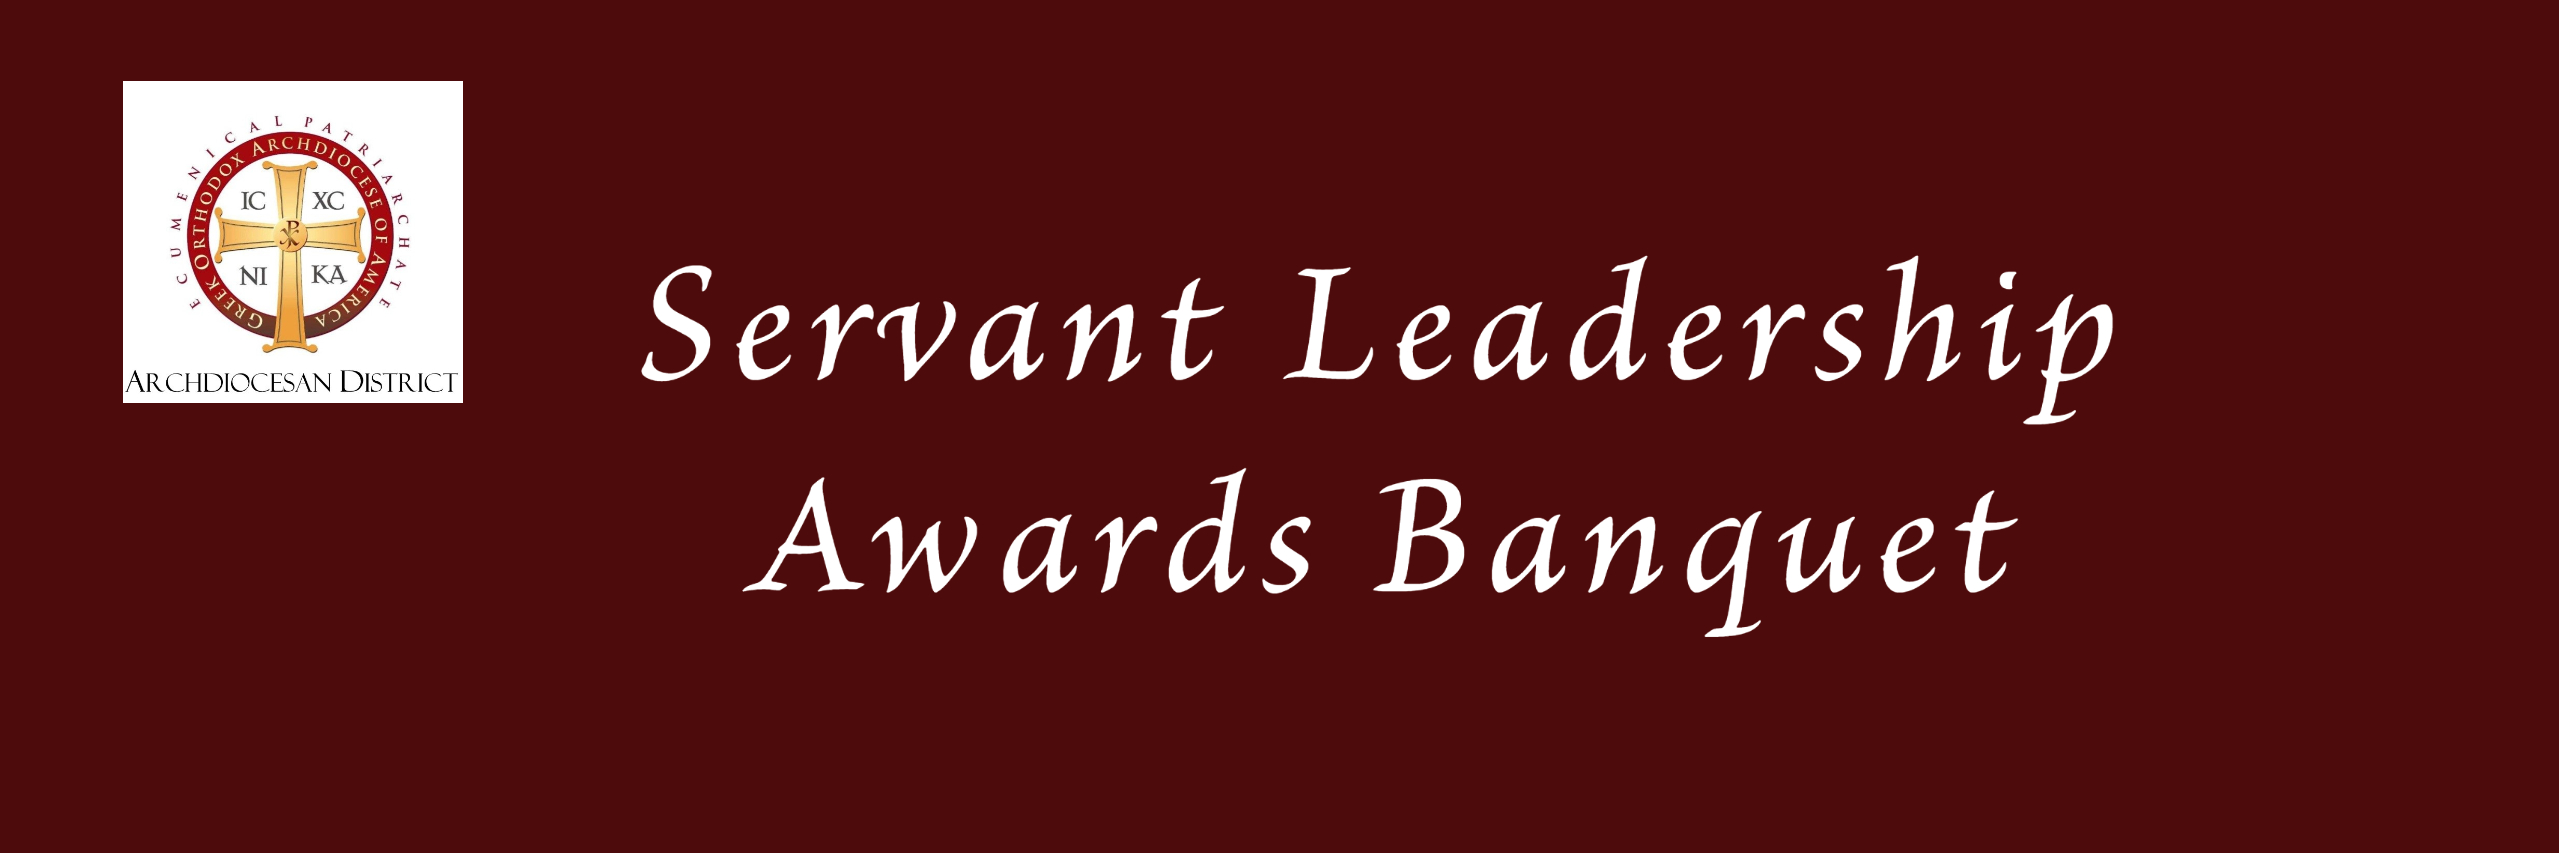 1st Annual Servant Leadership Awards Banquet